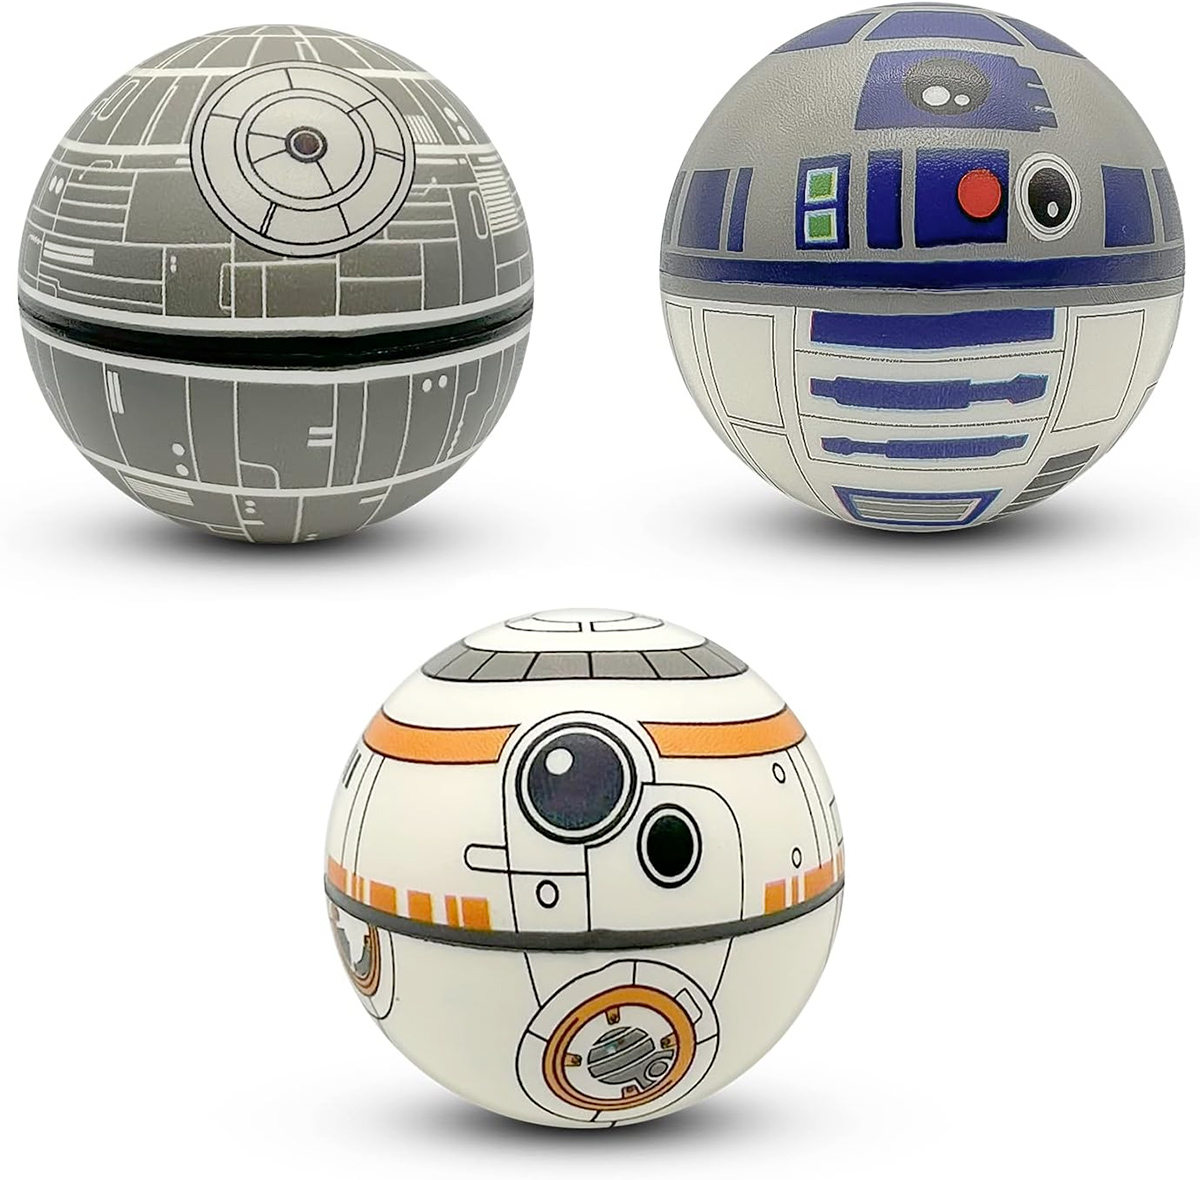 Bolas Anti-Stress Star Wars: R2-D2, BB-8 e Estrela da Morte